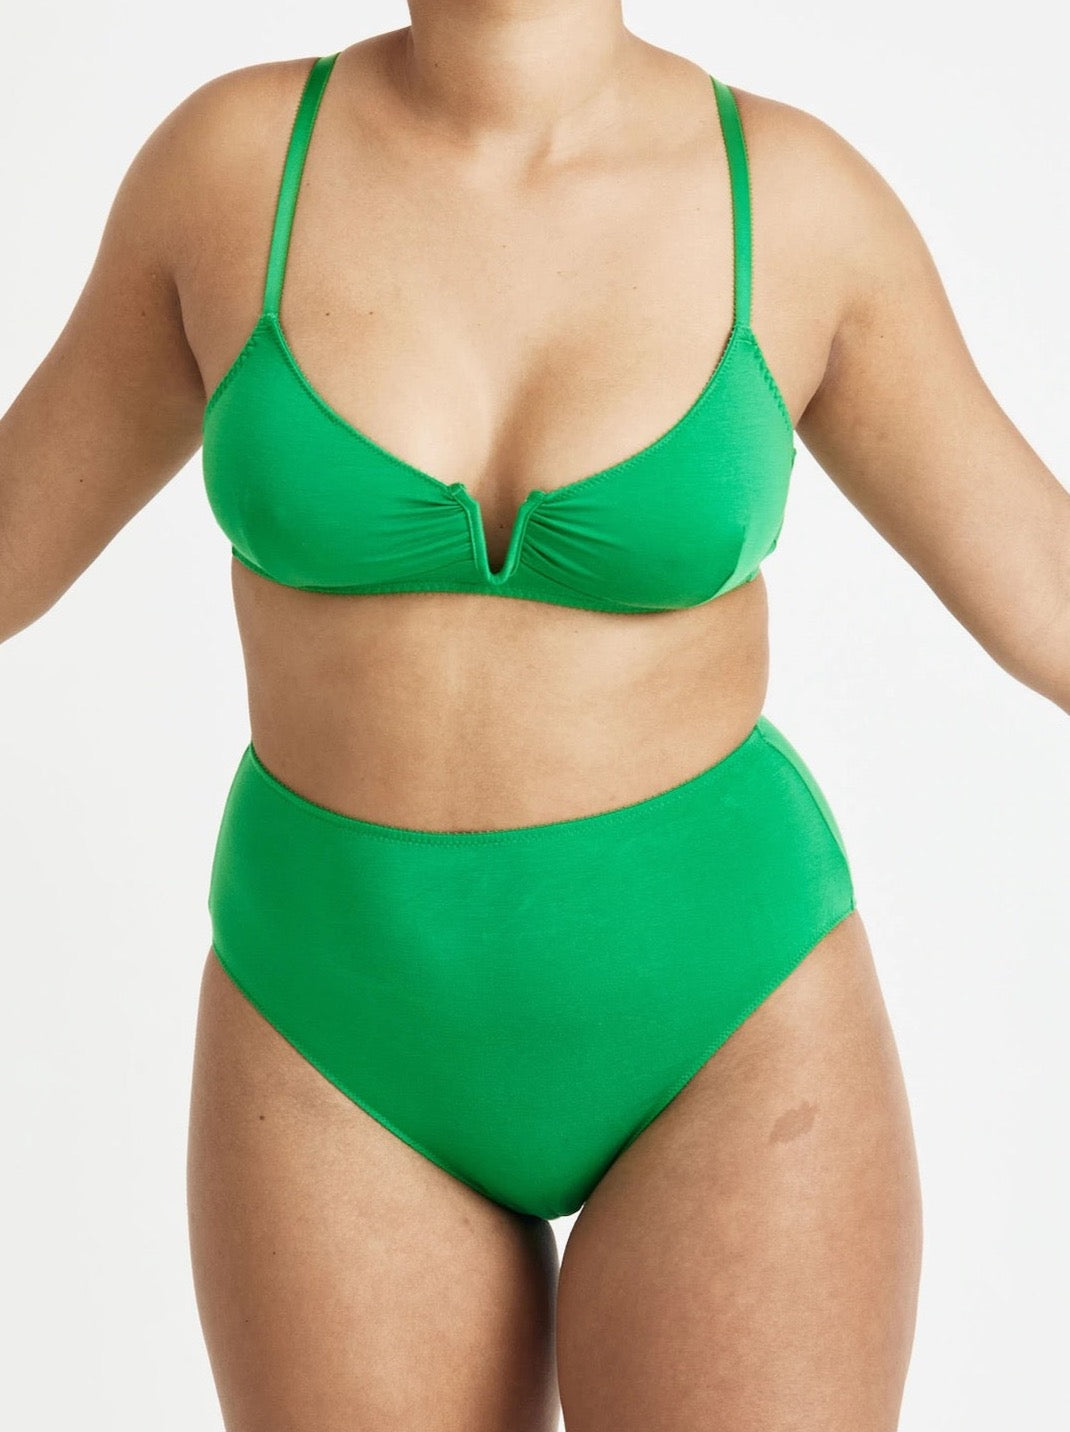 A woman in a green Angela Bra – Poise by Videris bikini top and bottom.